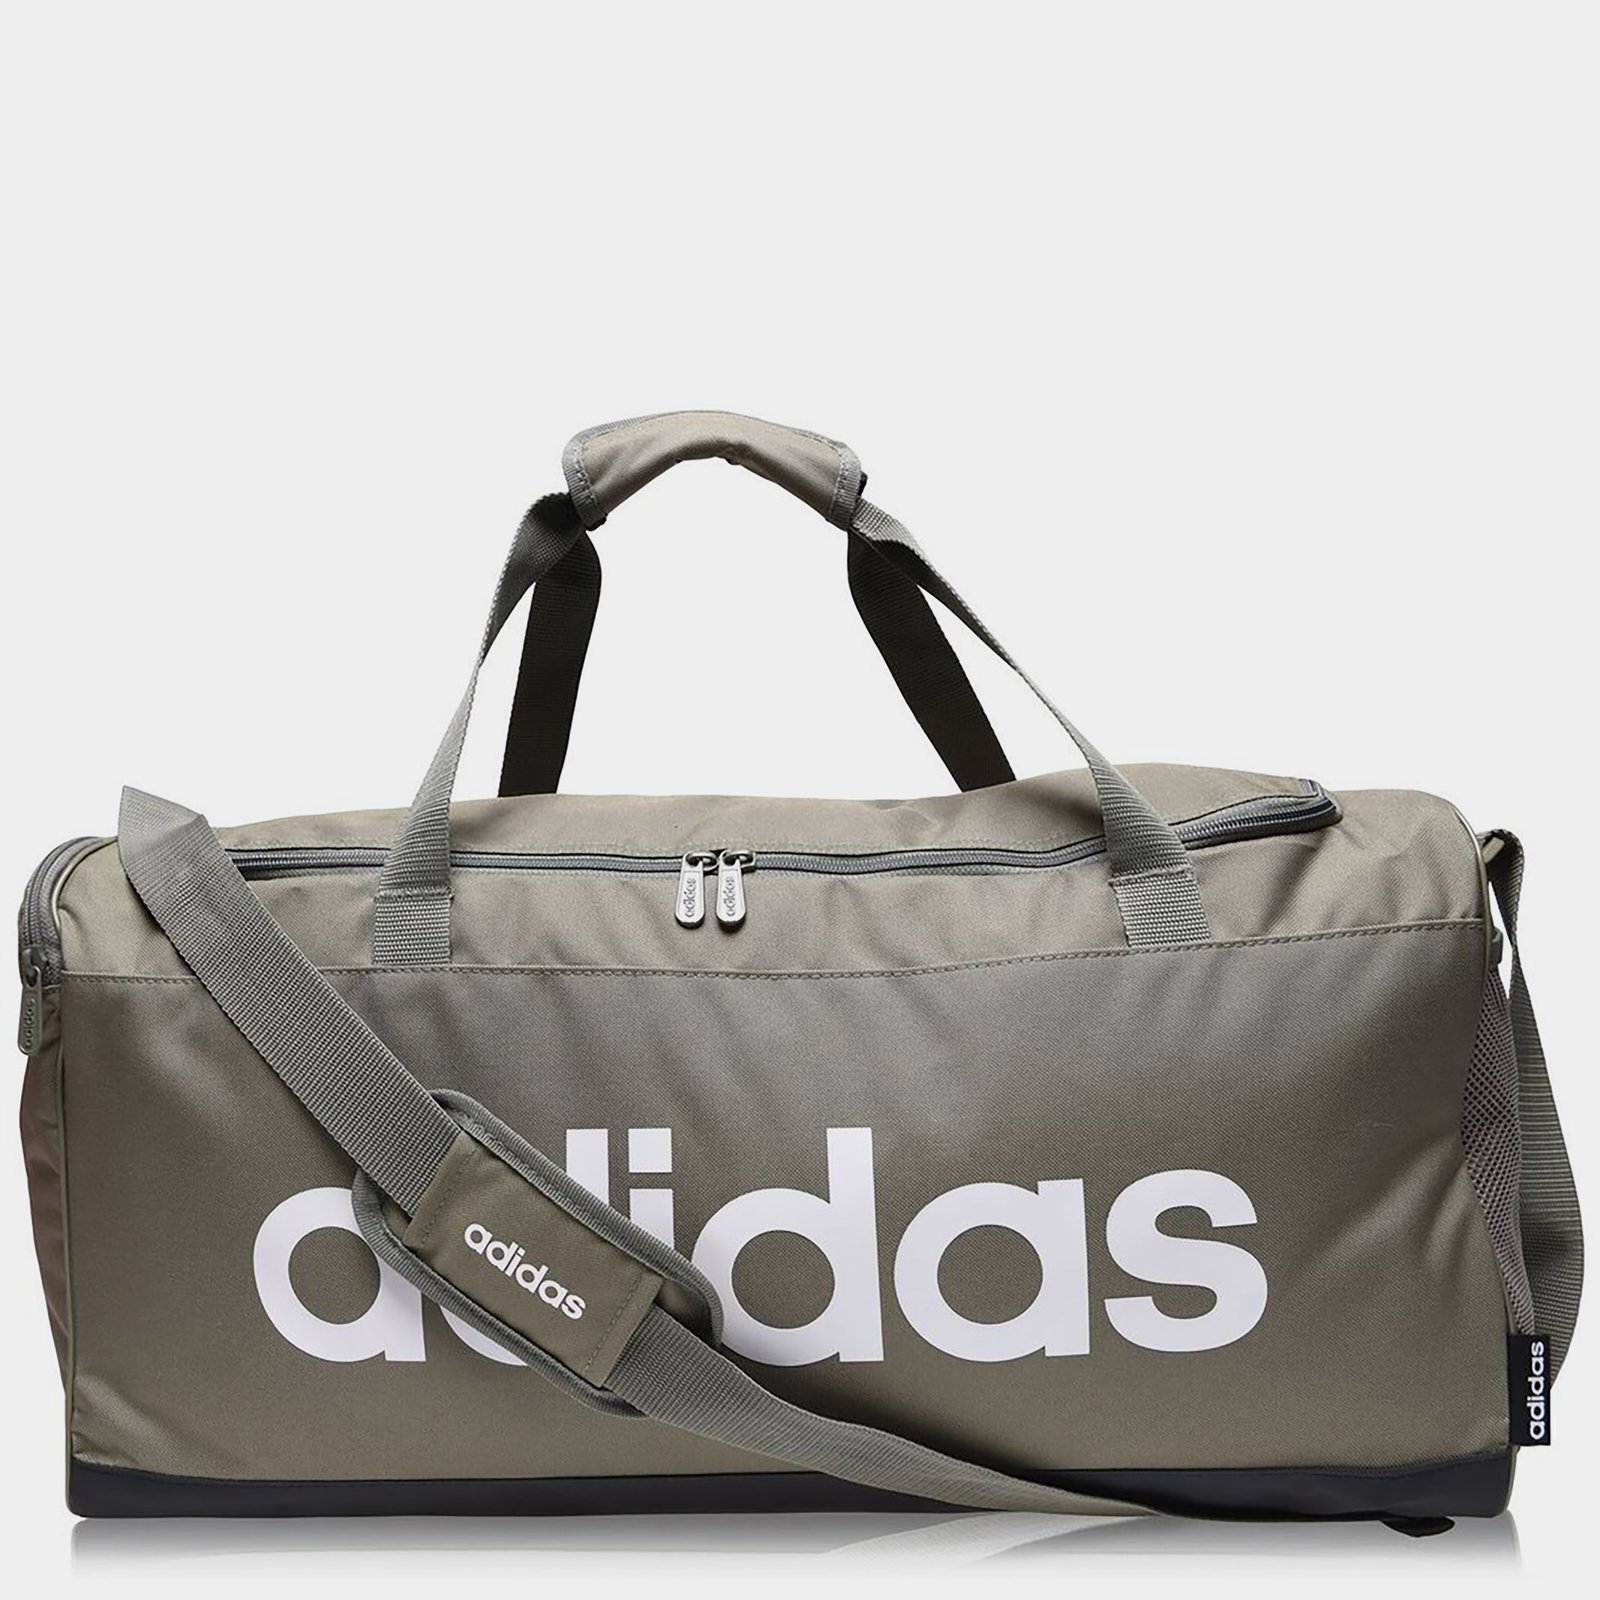 2021-22 Manchester United adidas Gym Bag